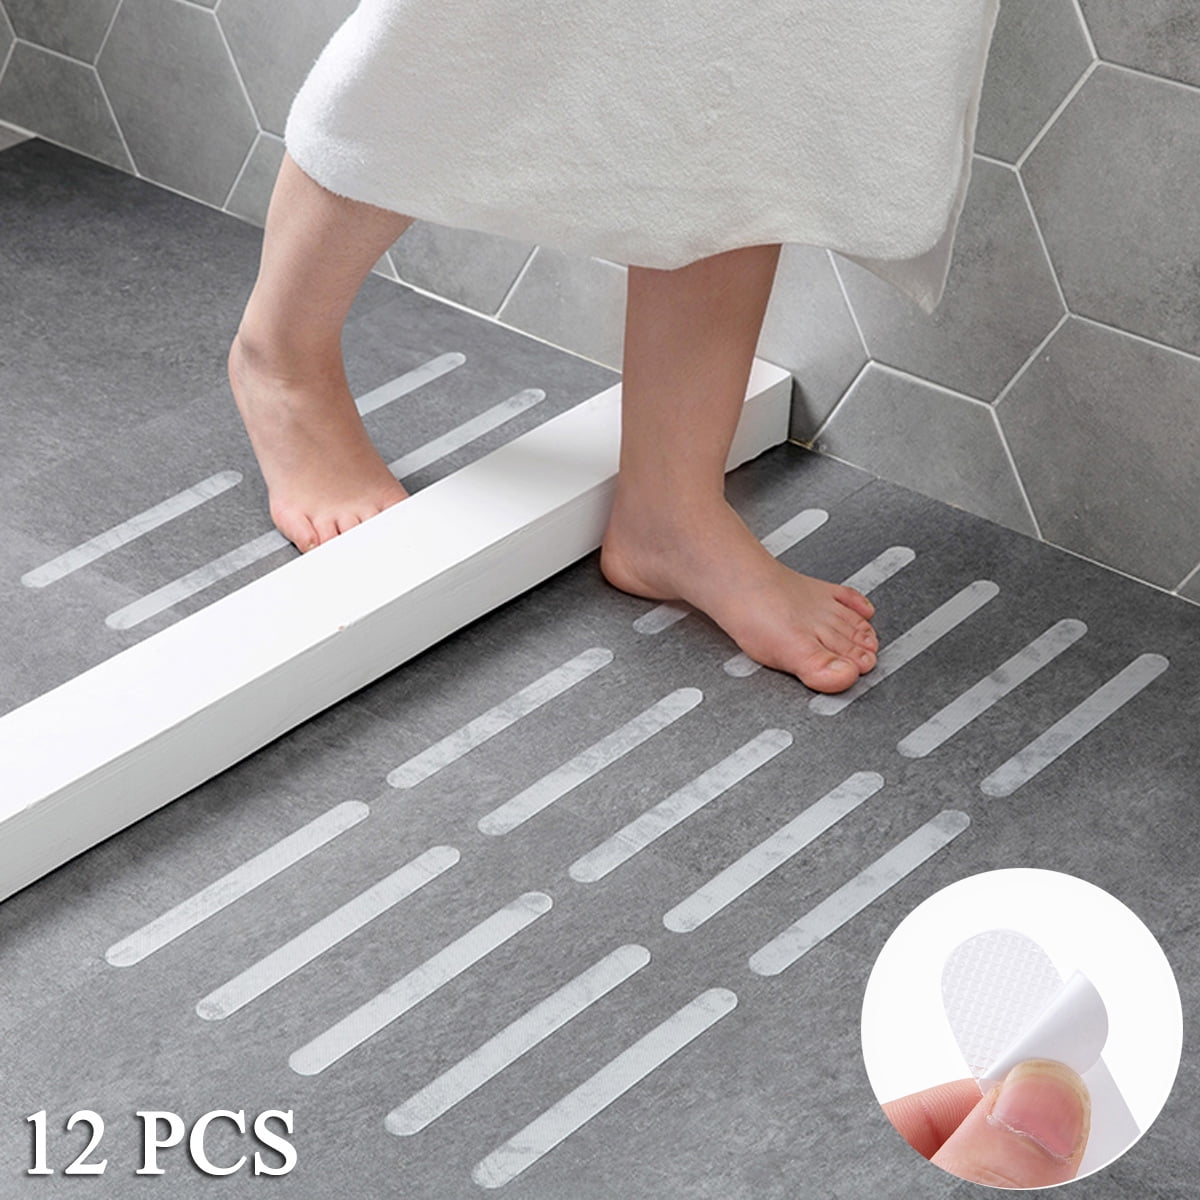 Details about   Anti-slip Bath Mat Super Absorbent Shower Bathroom Carpet Soft Toilet Floor 